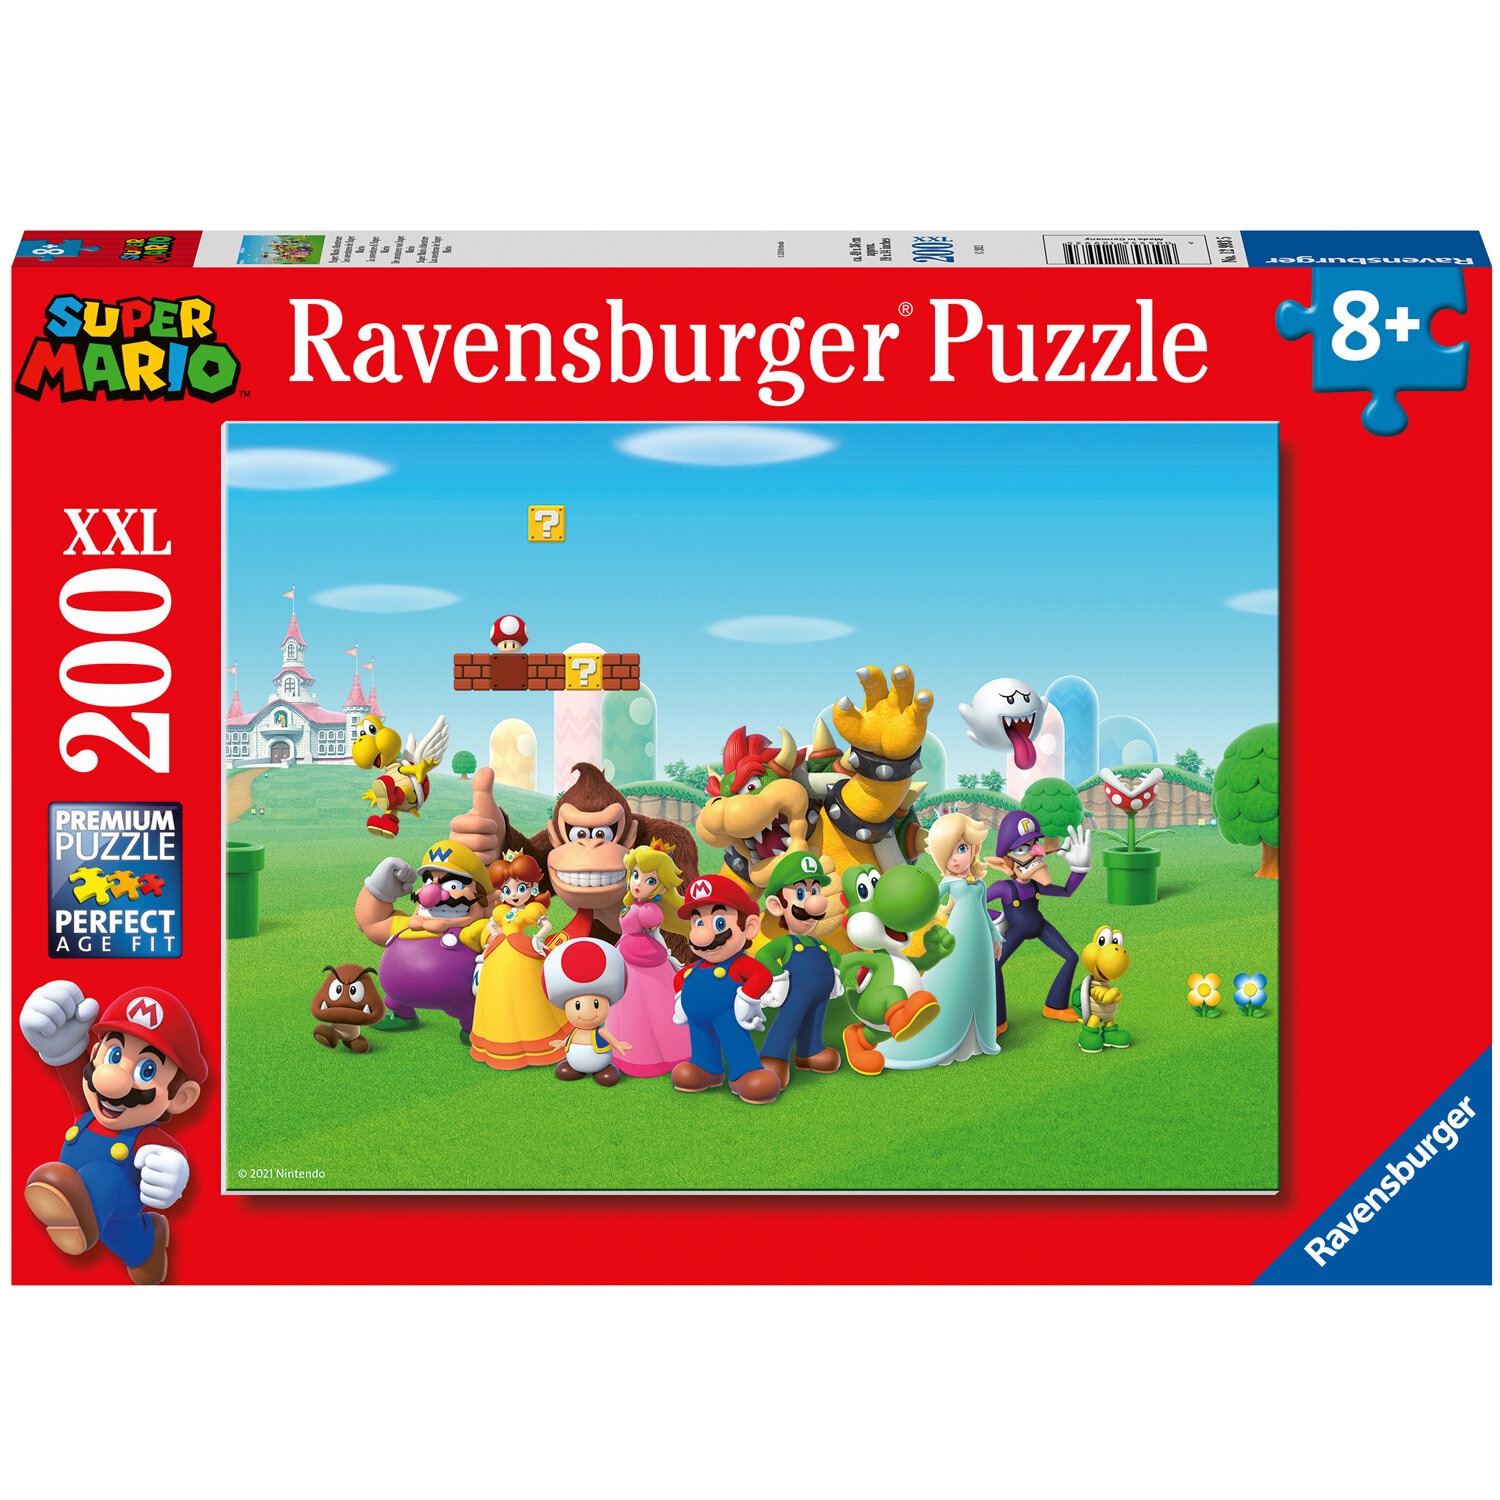 Ravensburger Puzzel - Super Mario Adventure 200 stukjes XXL